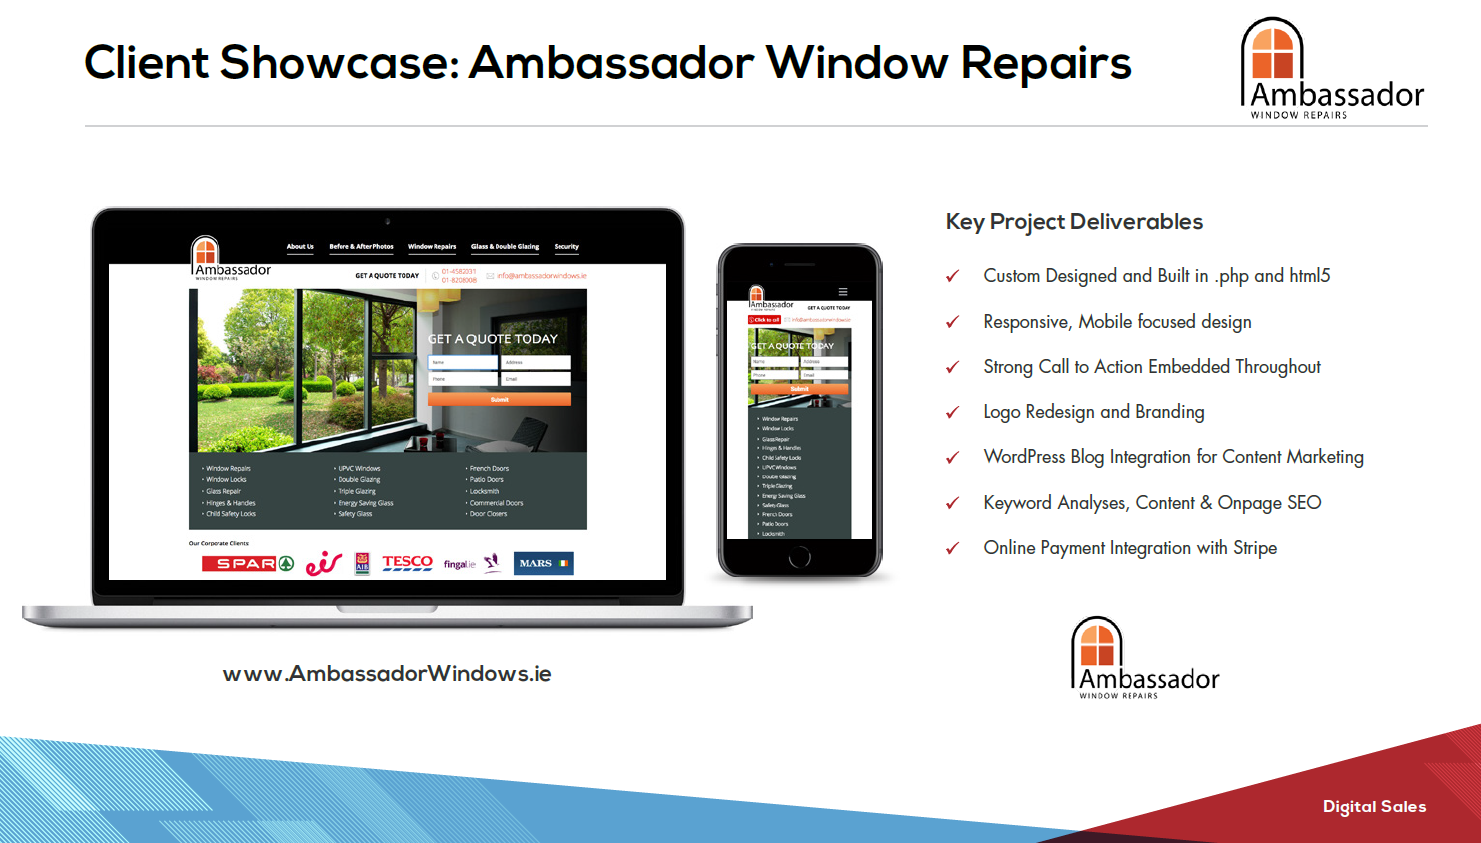 Ambassador Windows